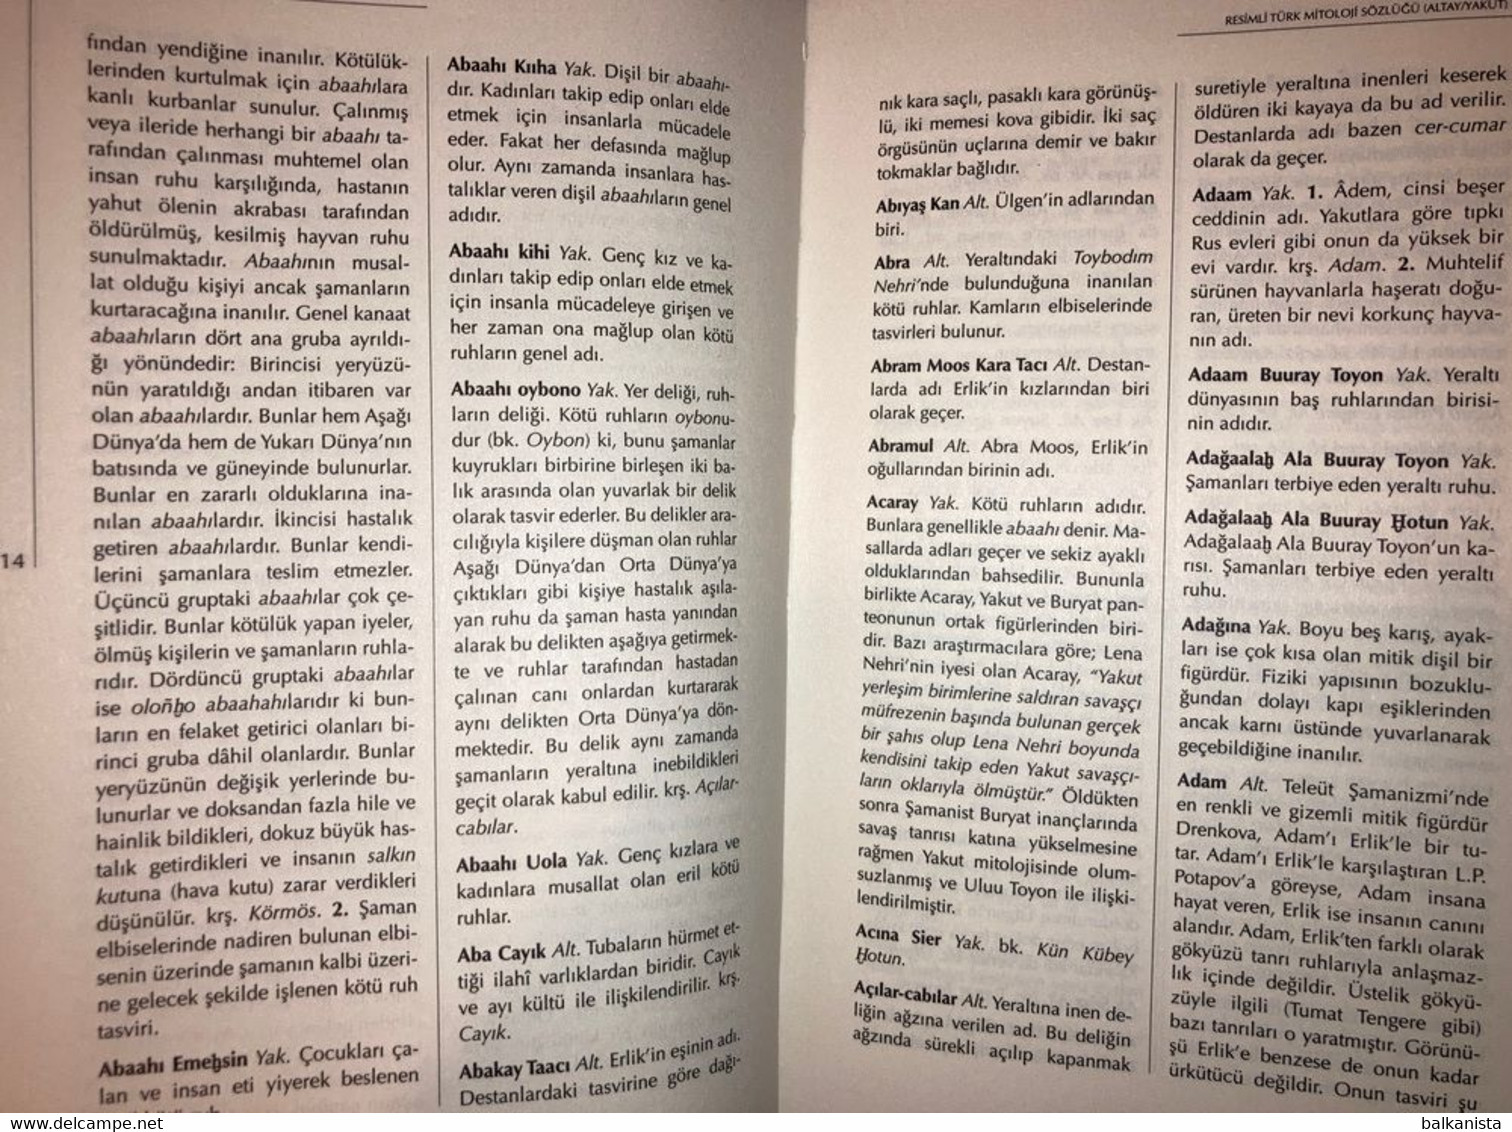 Turk Mitoloji Sozlugu - Turkish Turkic Mythology  Dictionary - Dictionaries